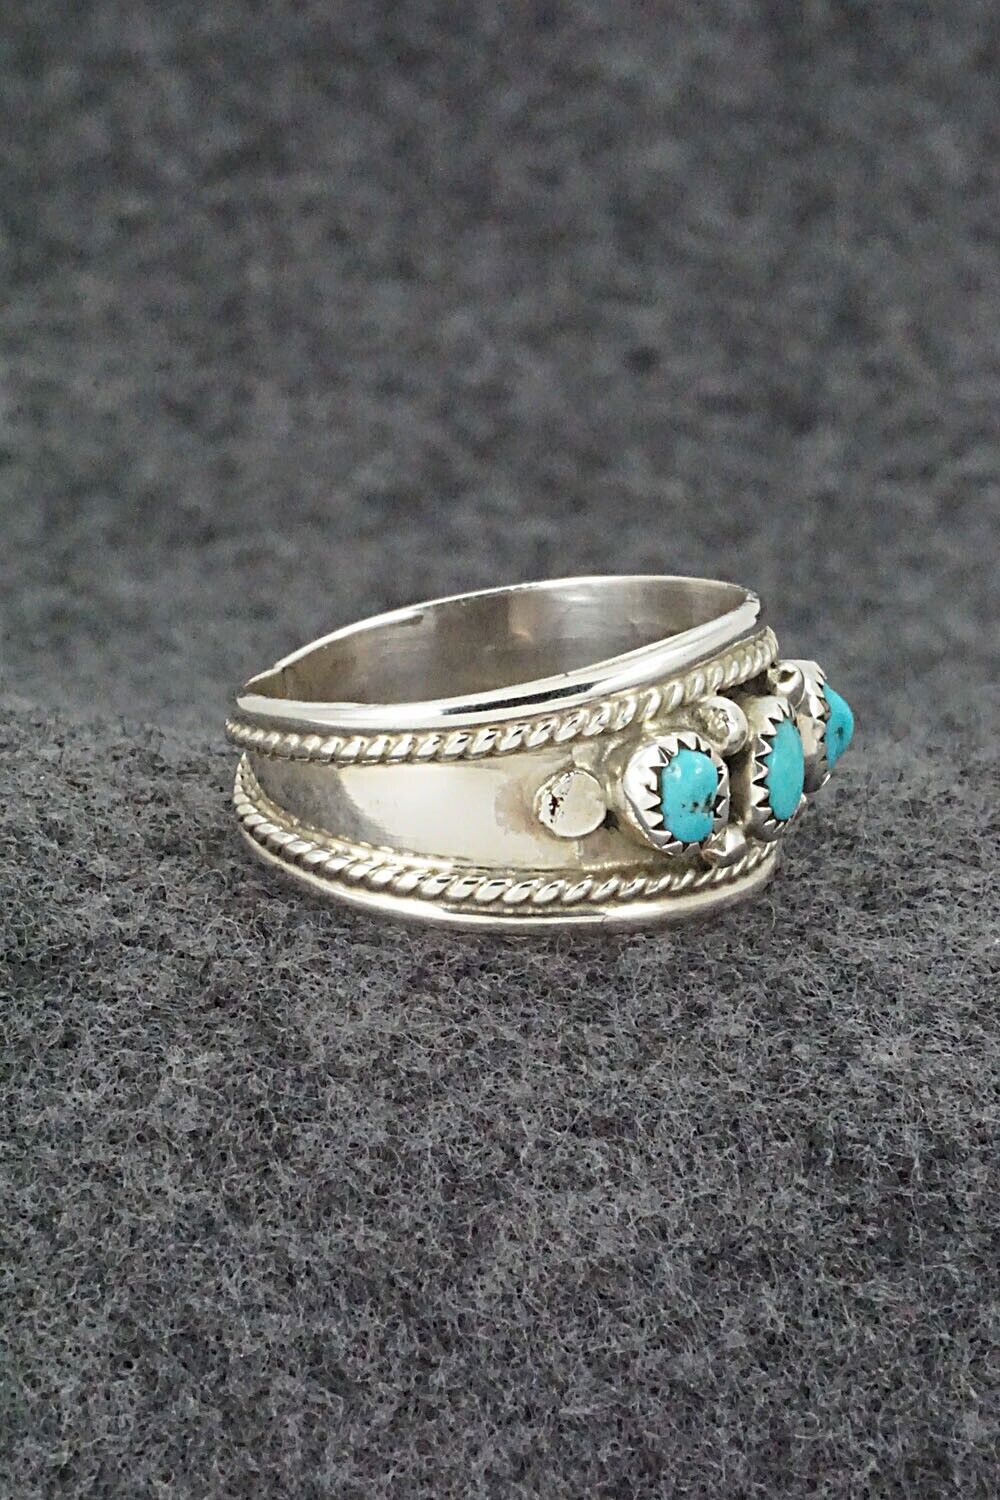 Turquoise & Sterling Silver Ring - Sondra Whitegoat - Size 11.5